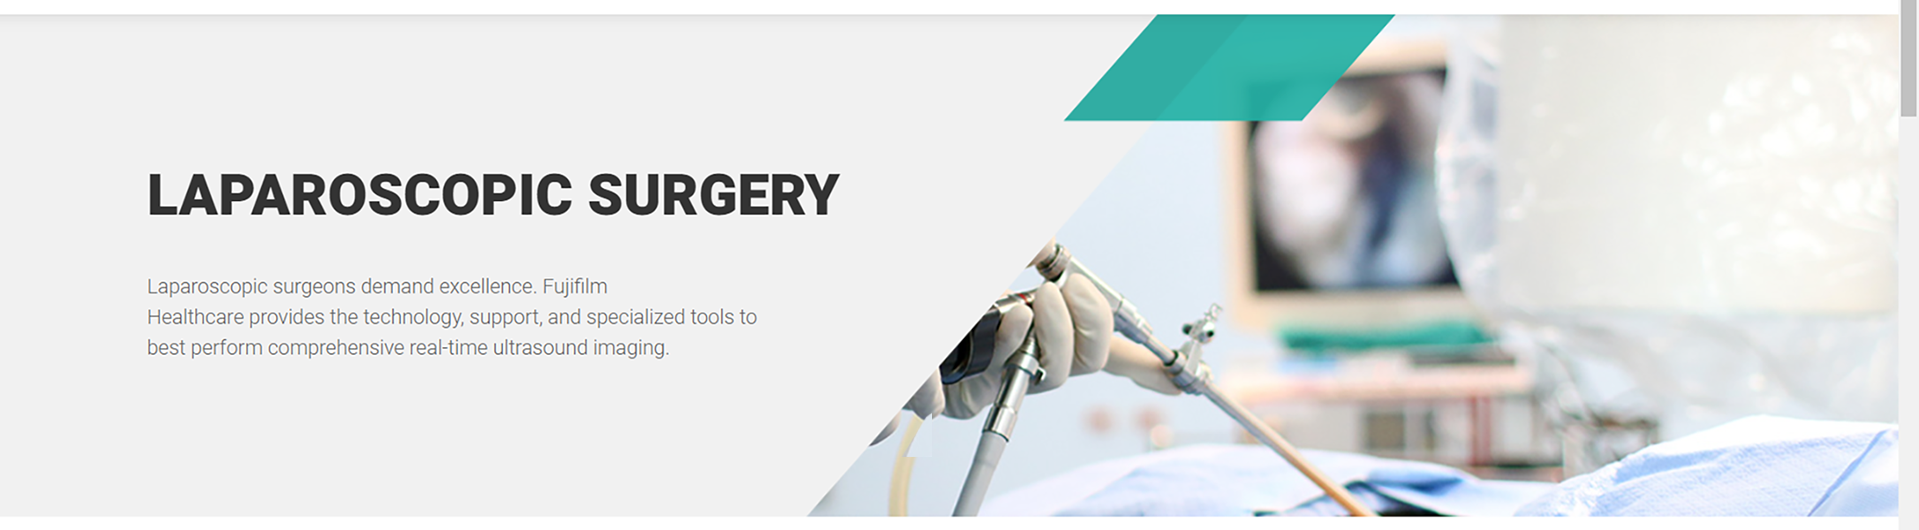 Laparoscopic Surgery Banner